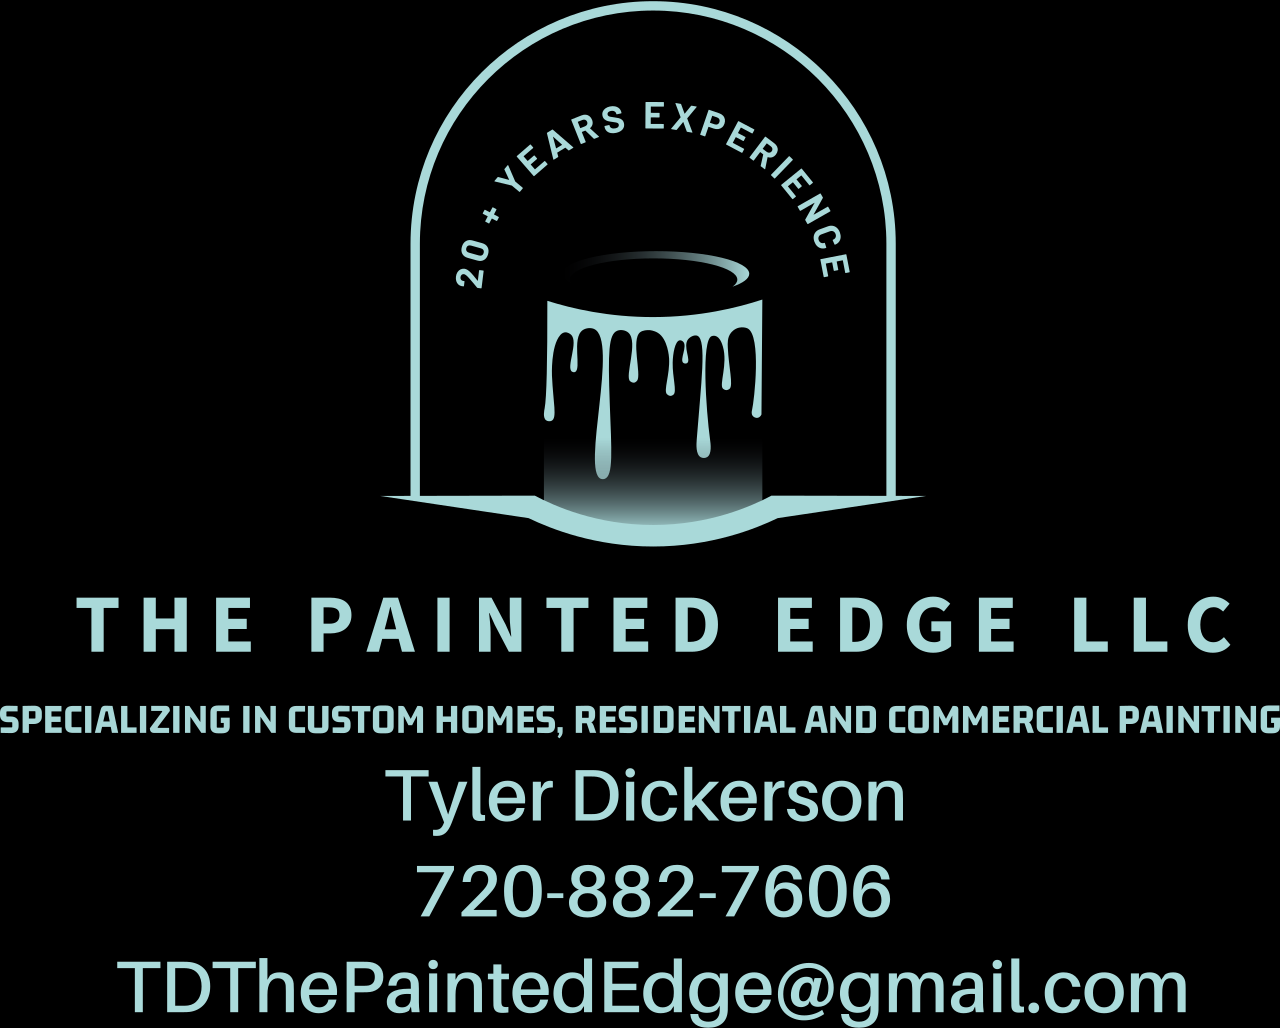 The Painted Edge LLC's logo